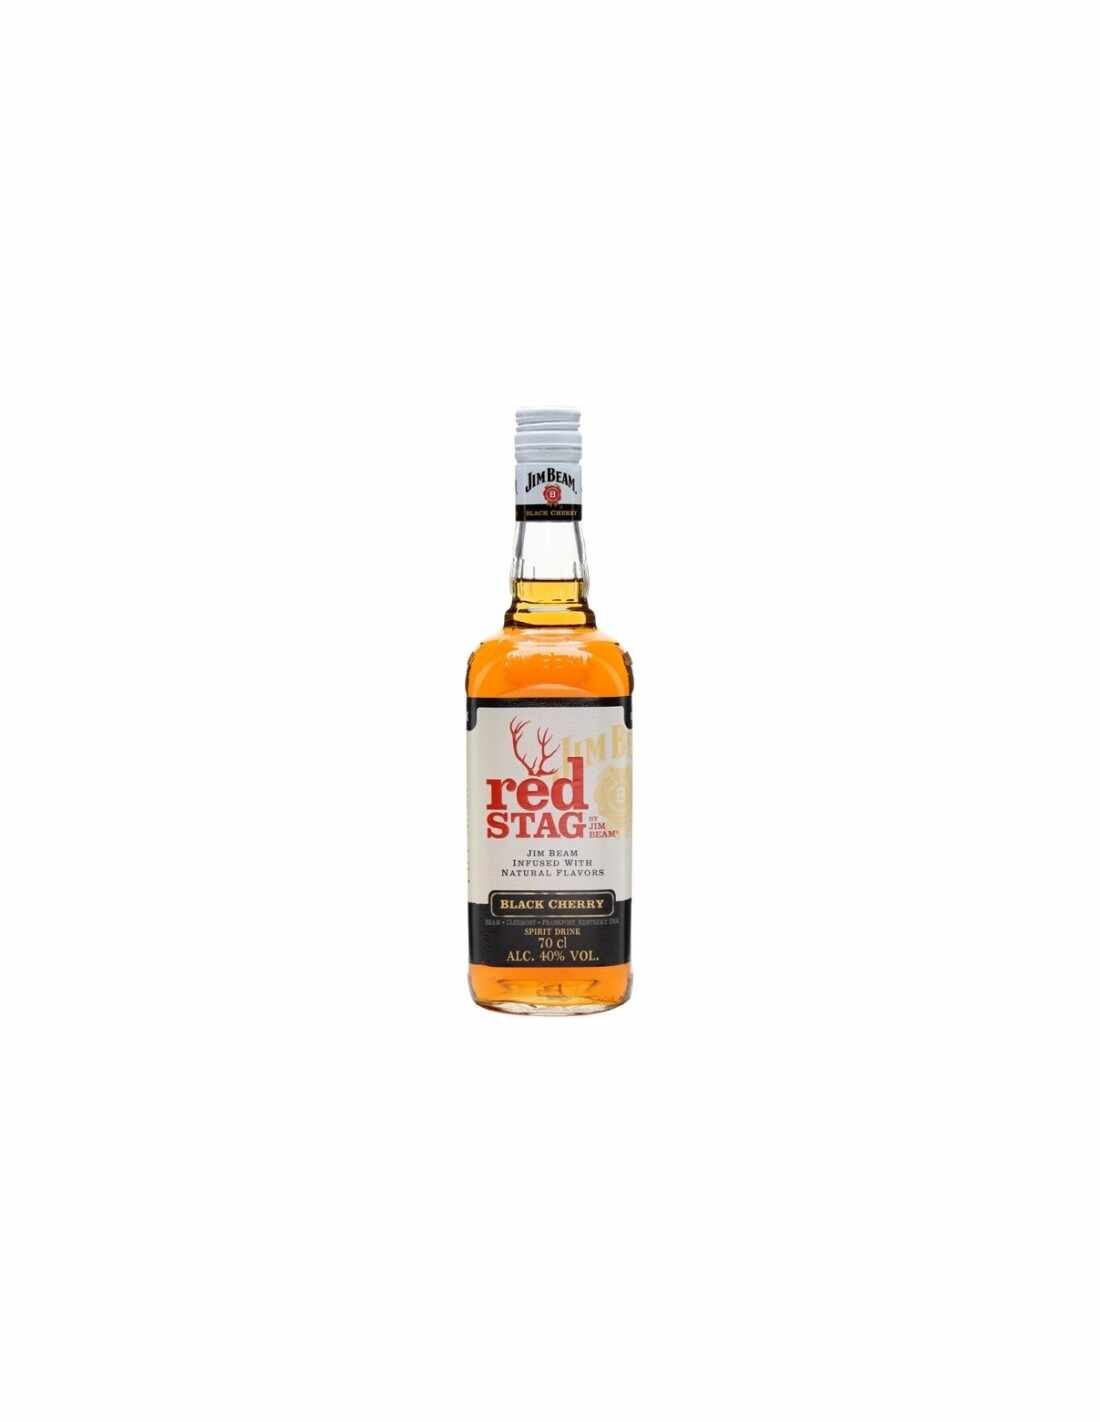 Whisky Jim Beam Red Stag Black Cherry 0.7L, 40% alc., America